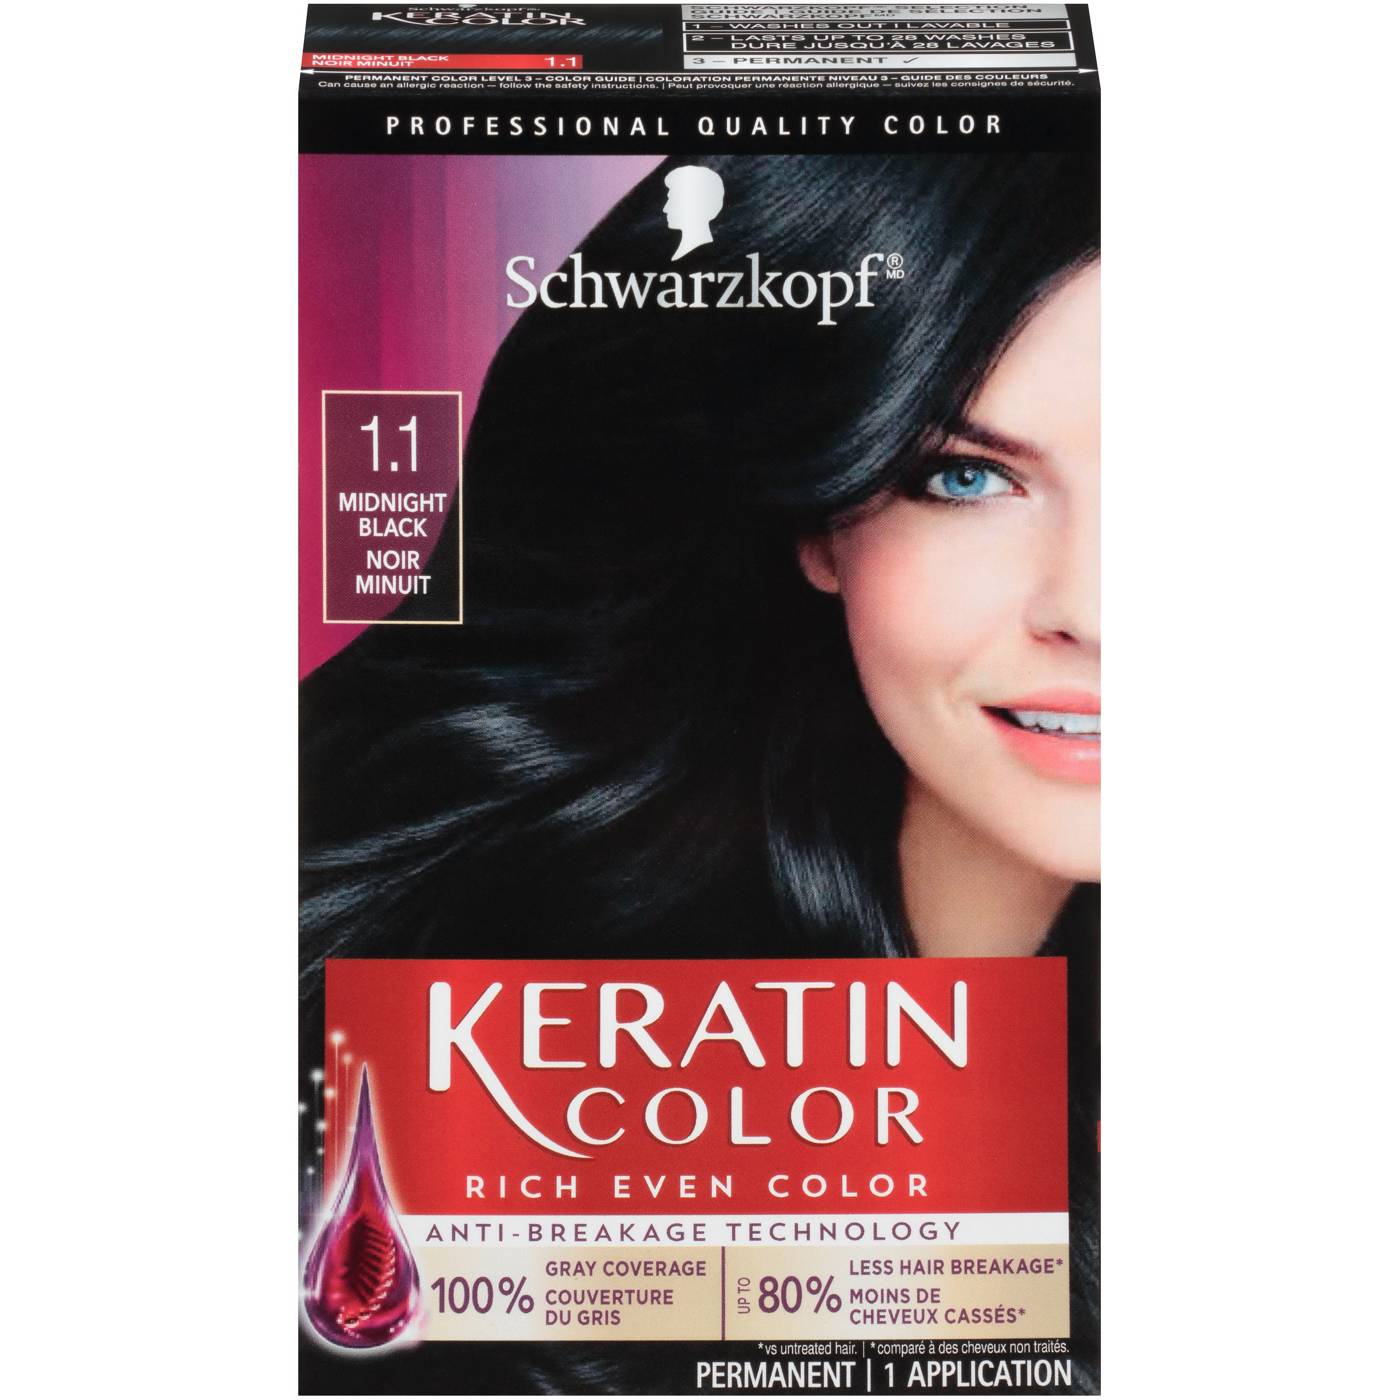 Schwarzkopf Keratin Color - 1.1 Midnight Black; image 1 of 5